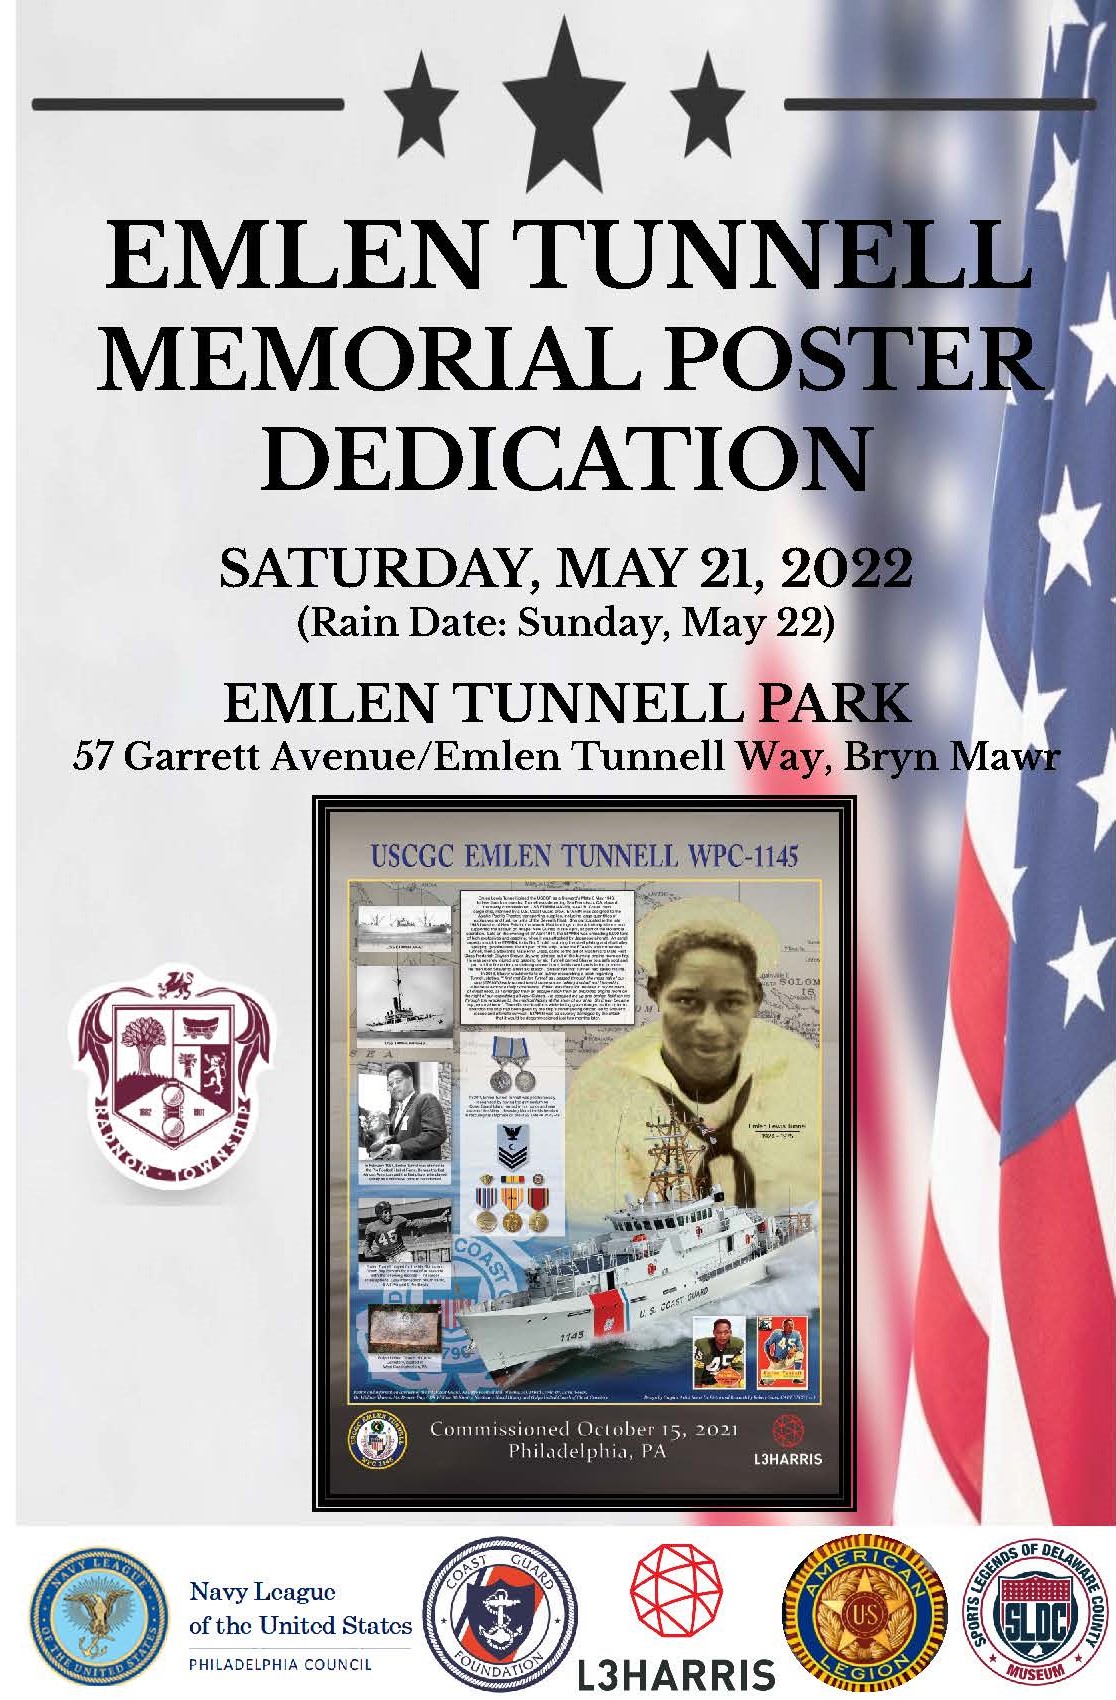 ET Memorial Poster Dedication Program FINAL_Page_1